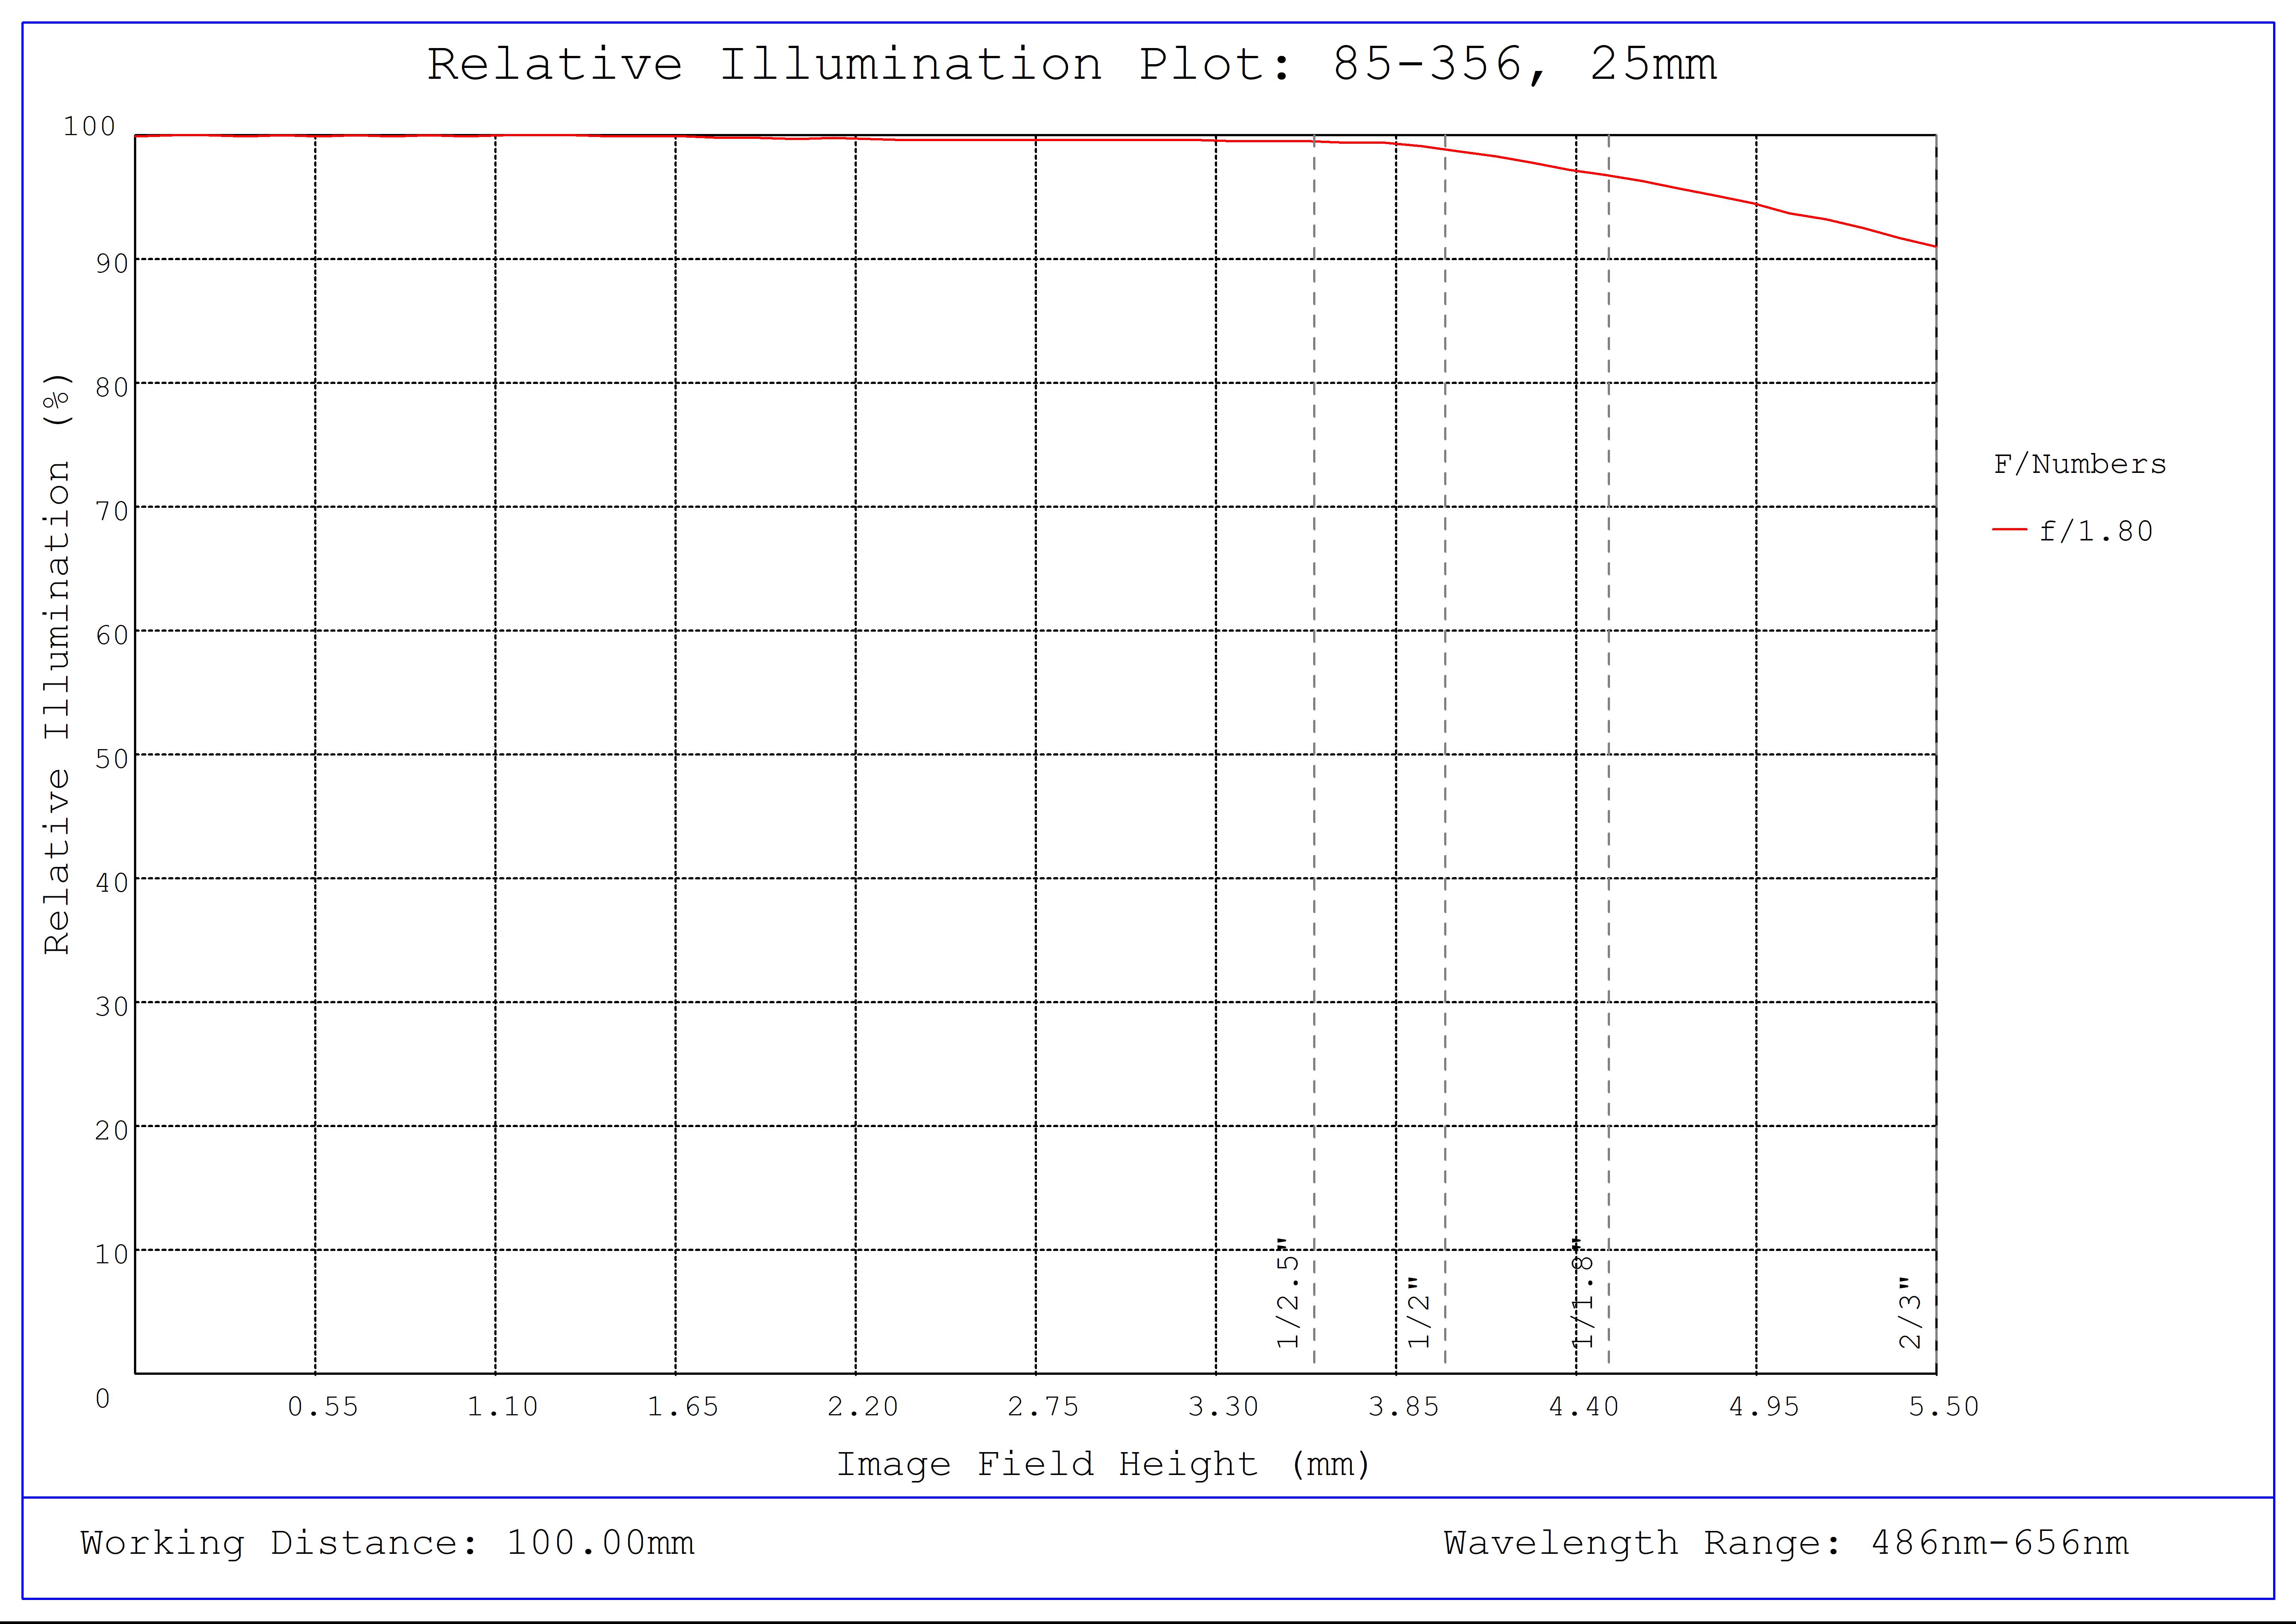 #85-356, 25mm, f/1.8 Ci Series Fixed Focal Length Lens, Relative Illumination Plot